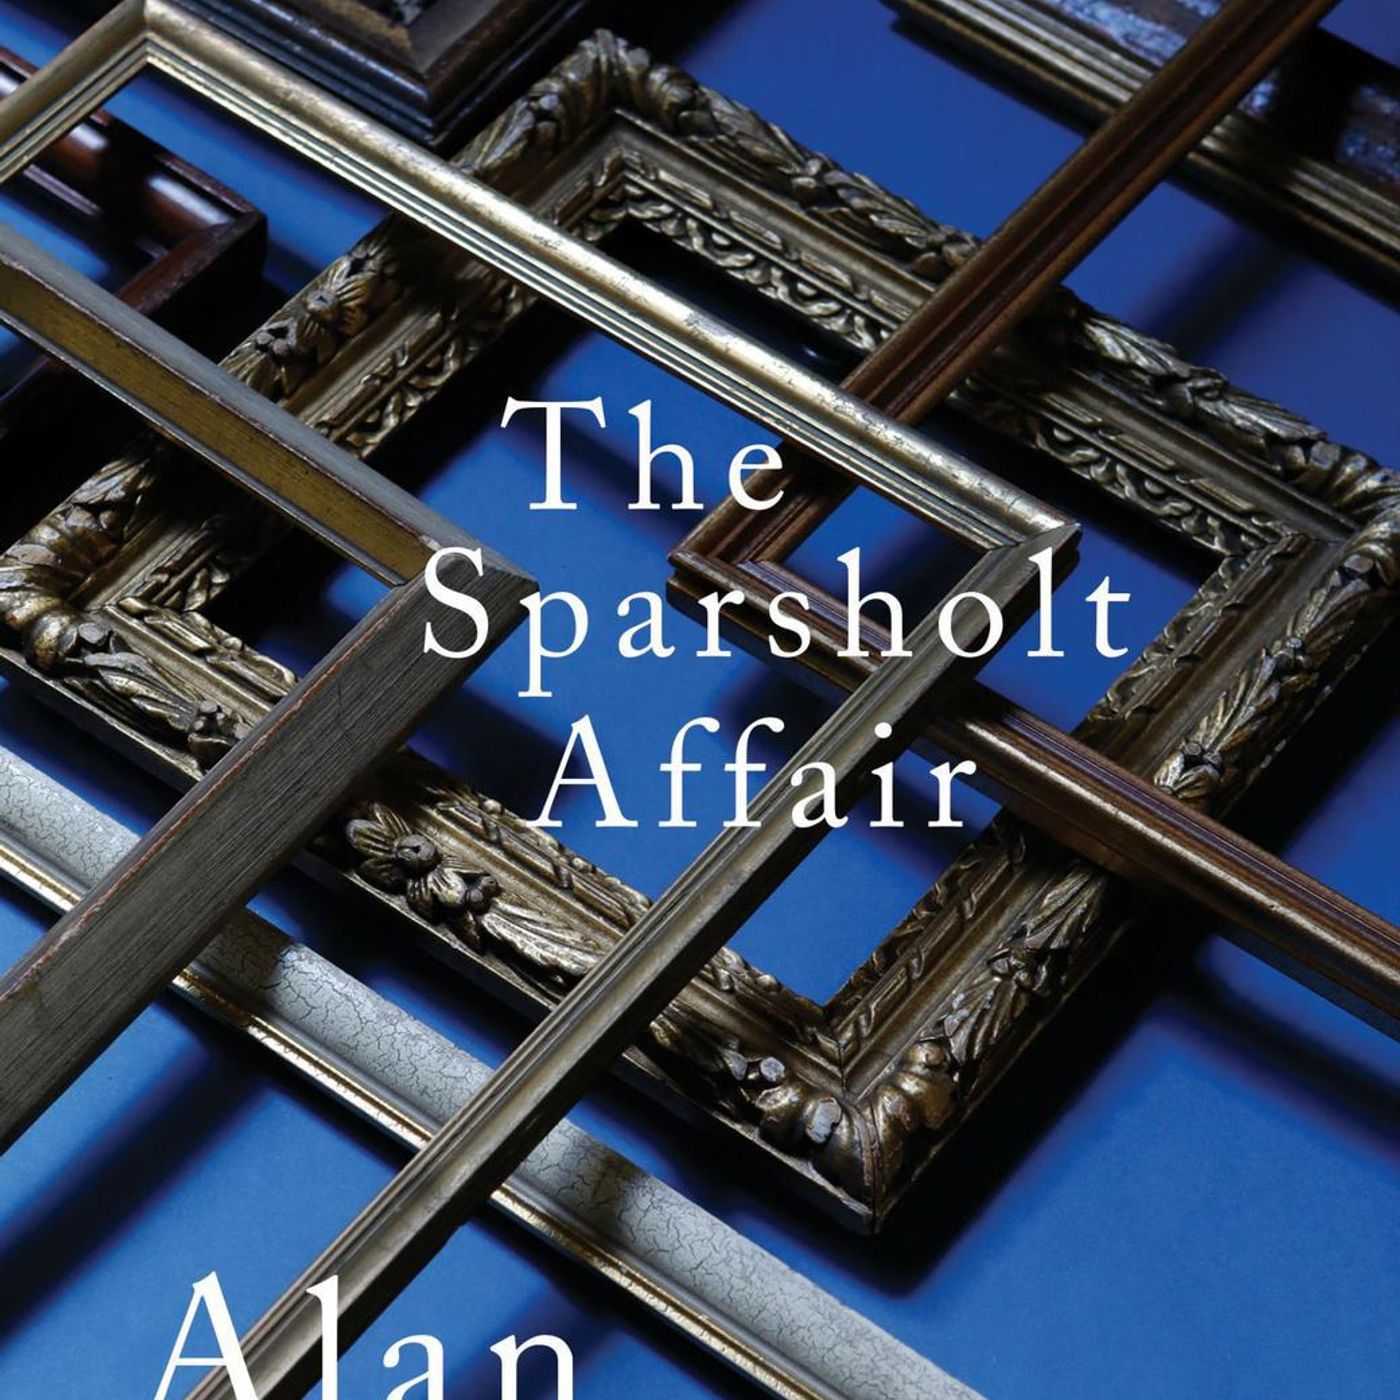 Alan Hollinghurst: The Sparsholt Affair